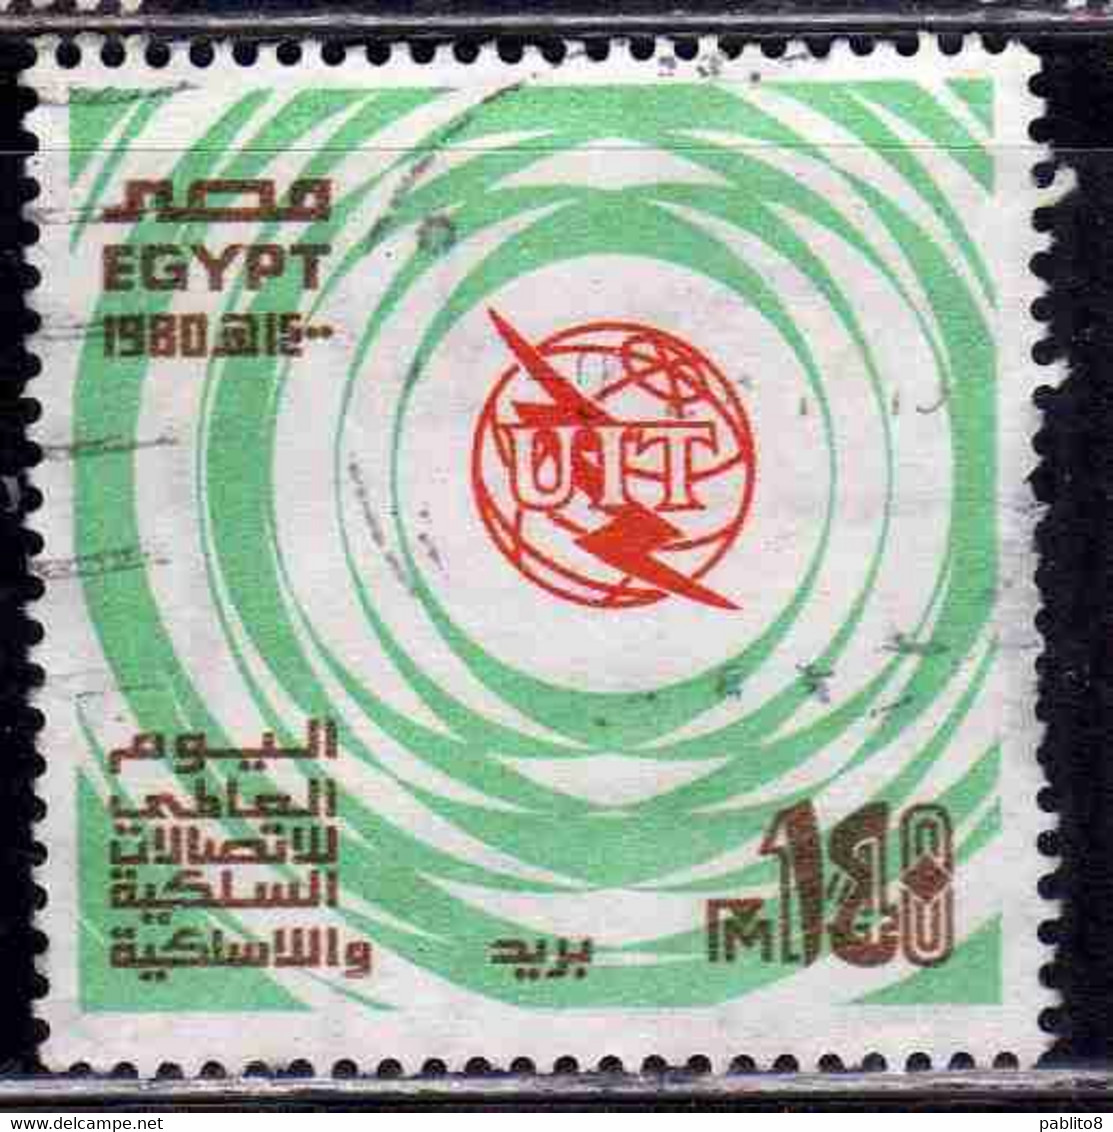 UAR EGYPT EGITTO 1980 UN ONU DAY INTERNATIONAL TELECOMMUNICATIONS DAY UNION 140m USED USATO OBLITERE' - Usados